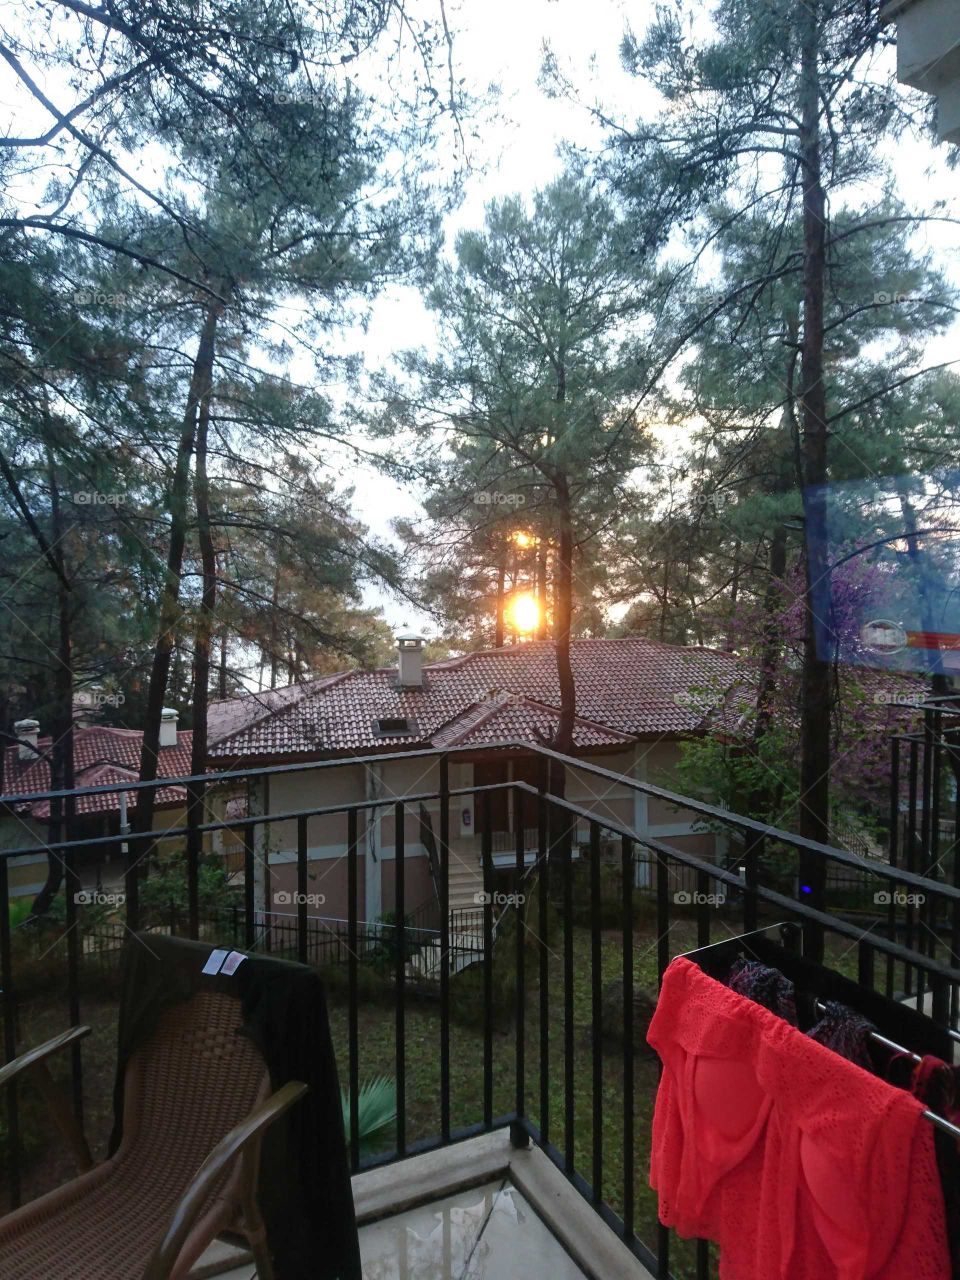 Sunrise in Turkey